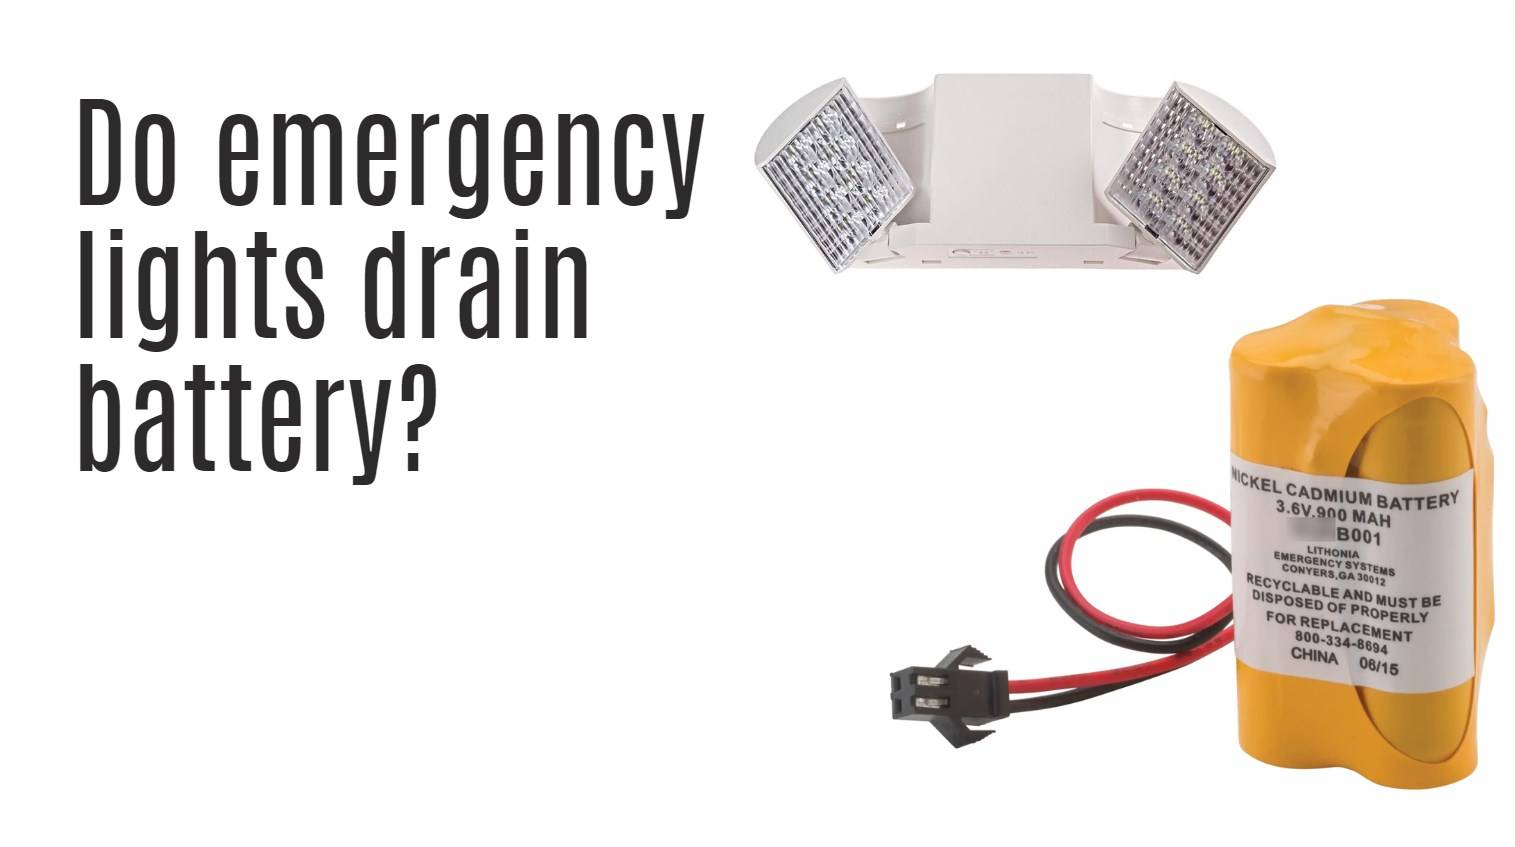 Do emergency lights drain battery?